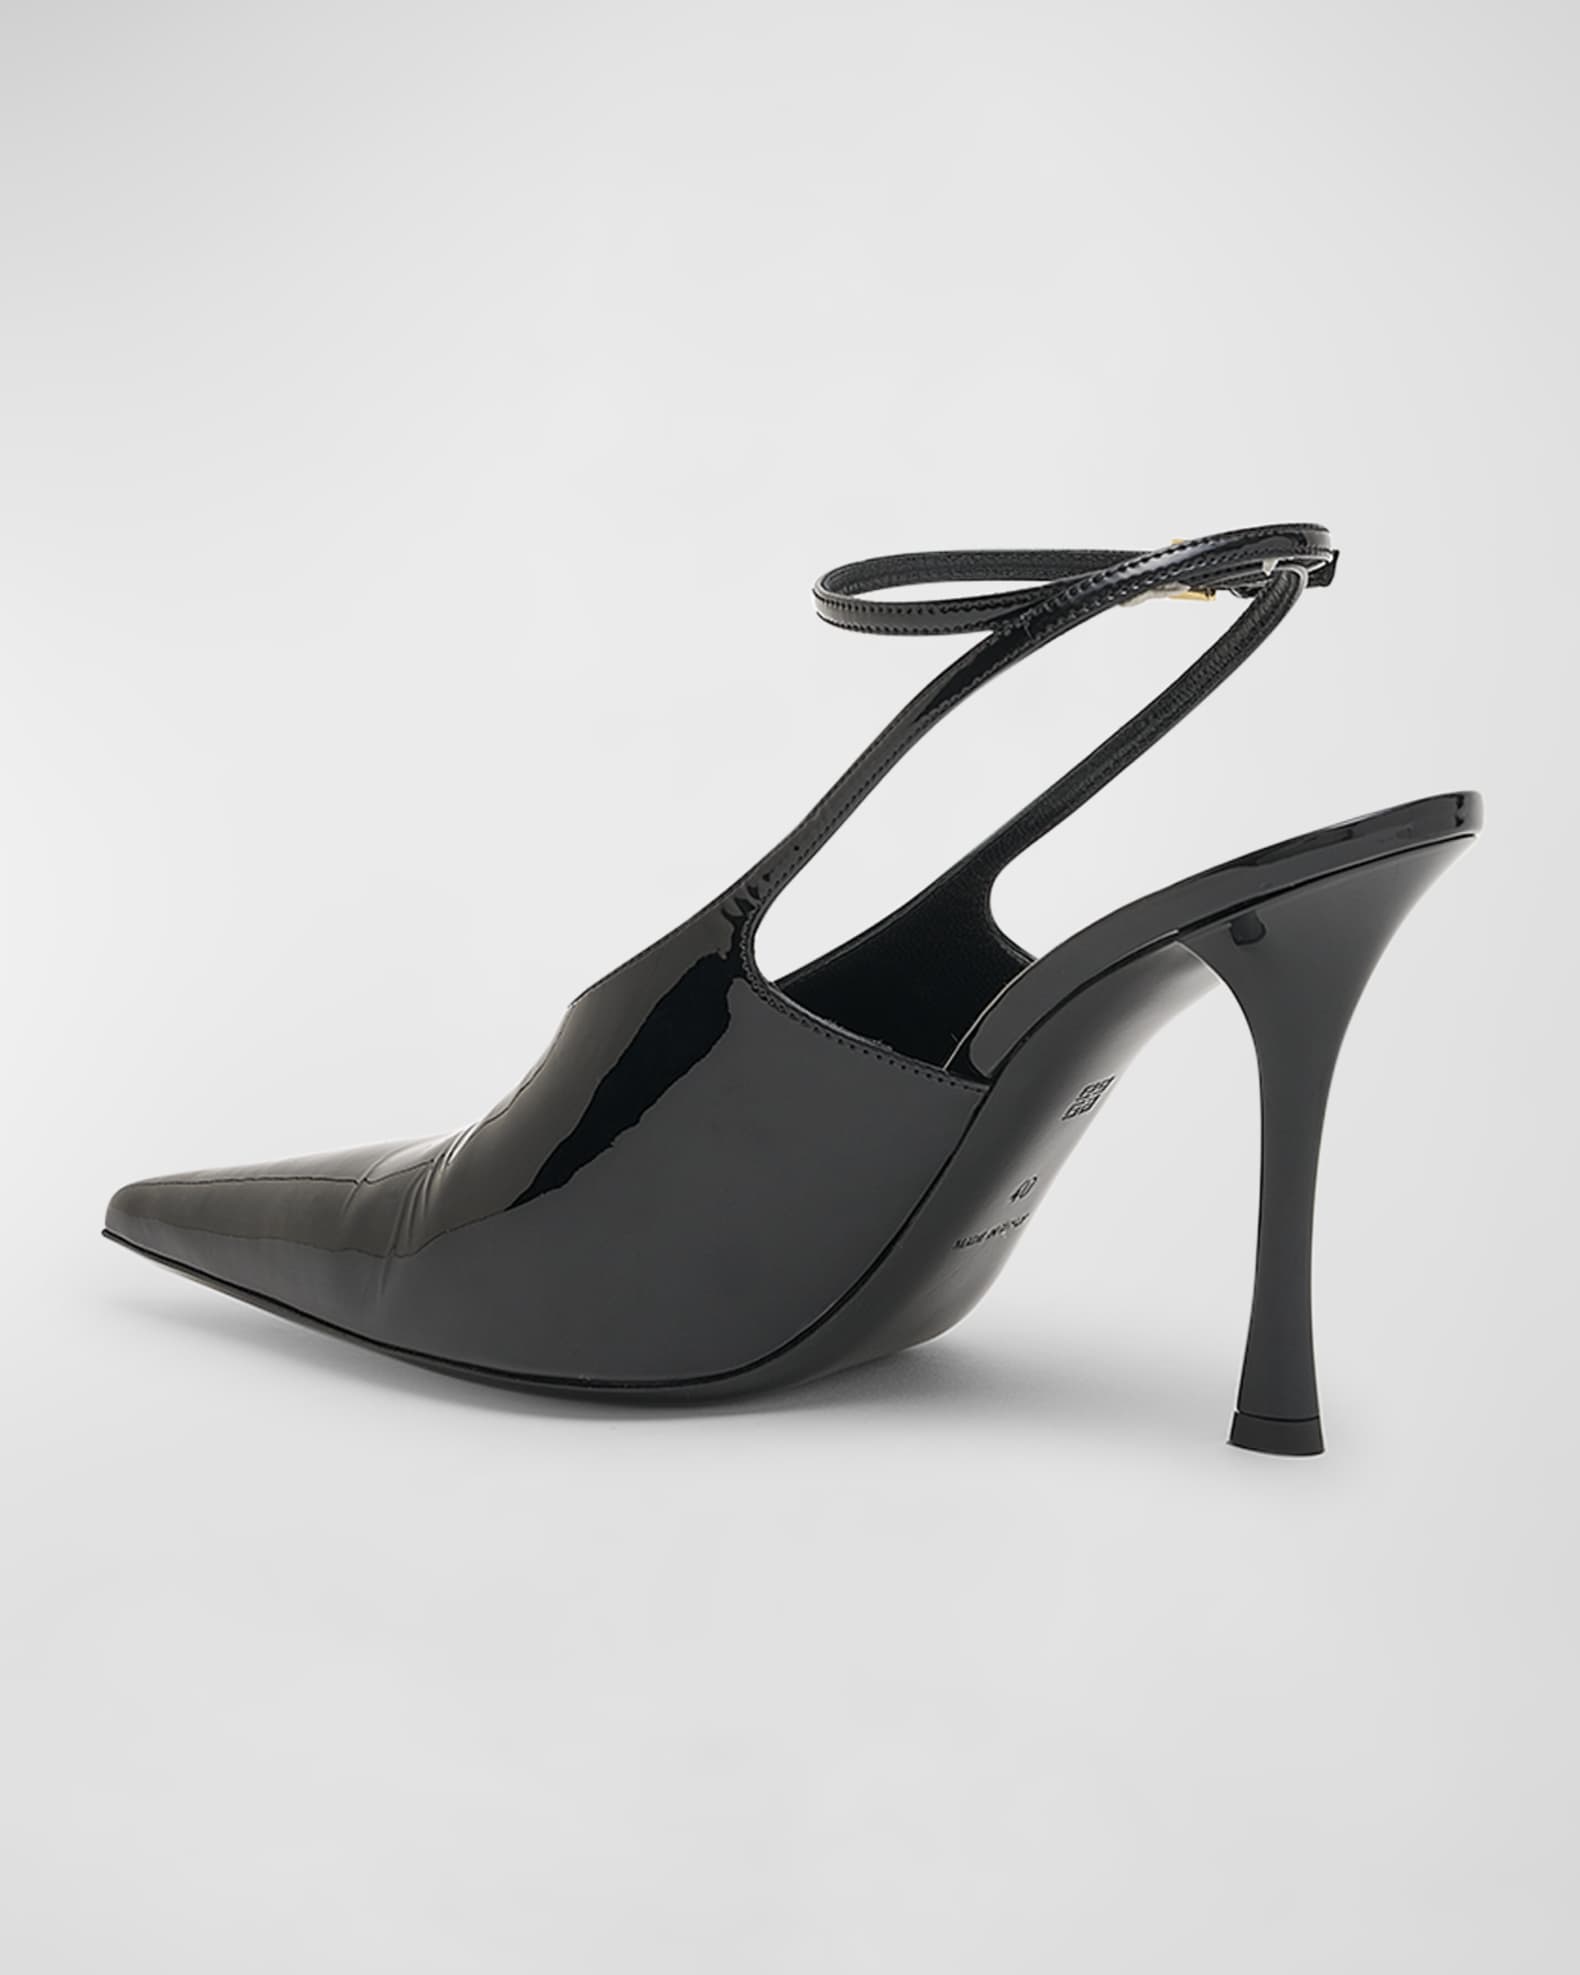 Givenchy Show Patent Ankle-Strap Pumps | Neiman Marcus